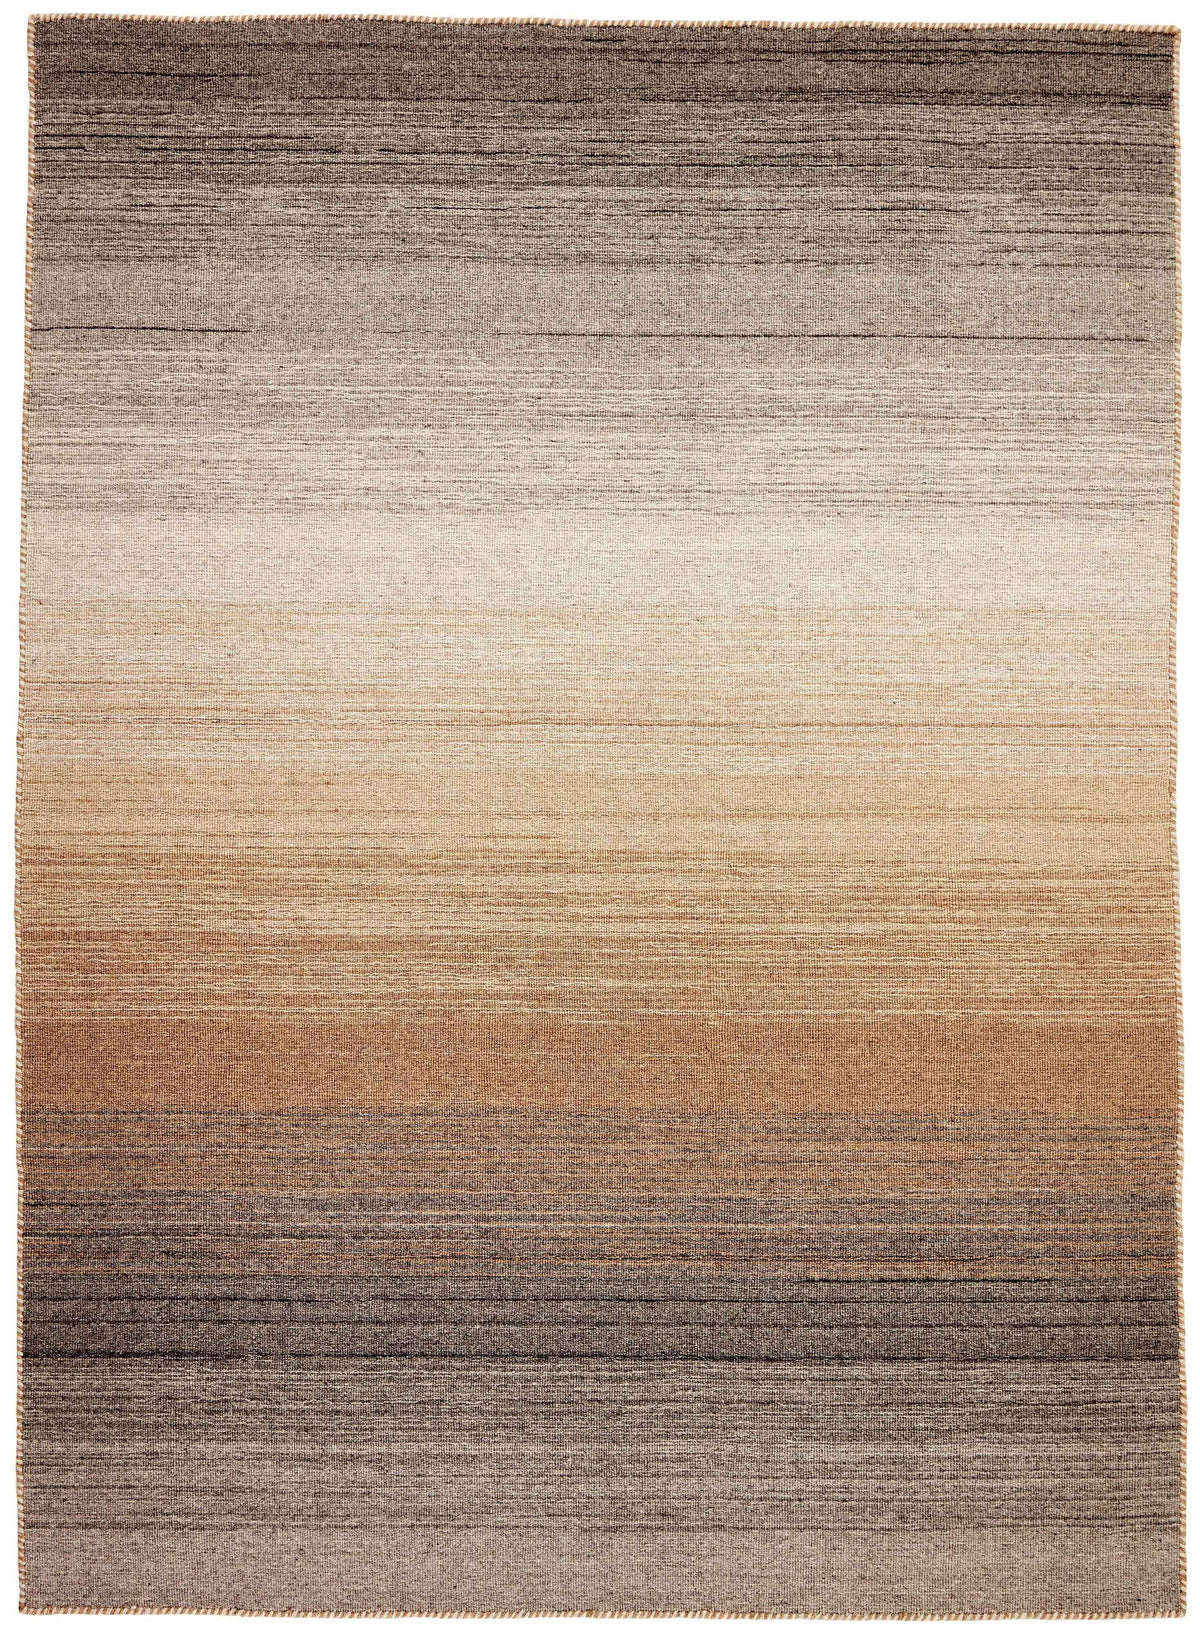 160x160 cm Indian Wool Multicolor Rug-HLD200106, Natural Multi - Rugmaster